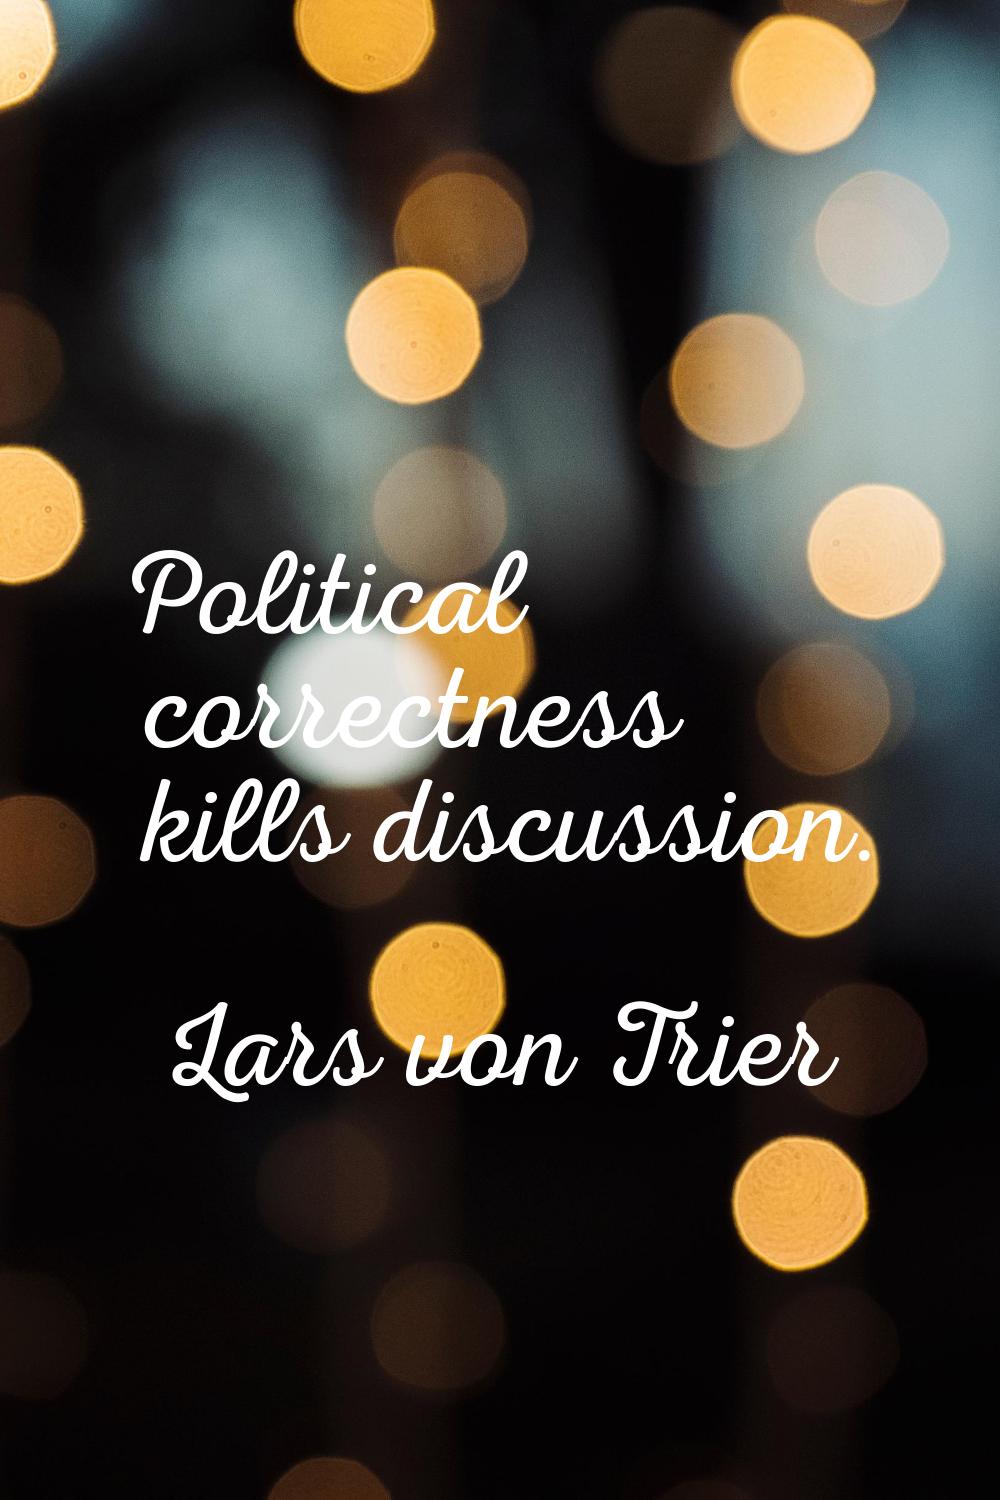 Political correctness kills discussion.